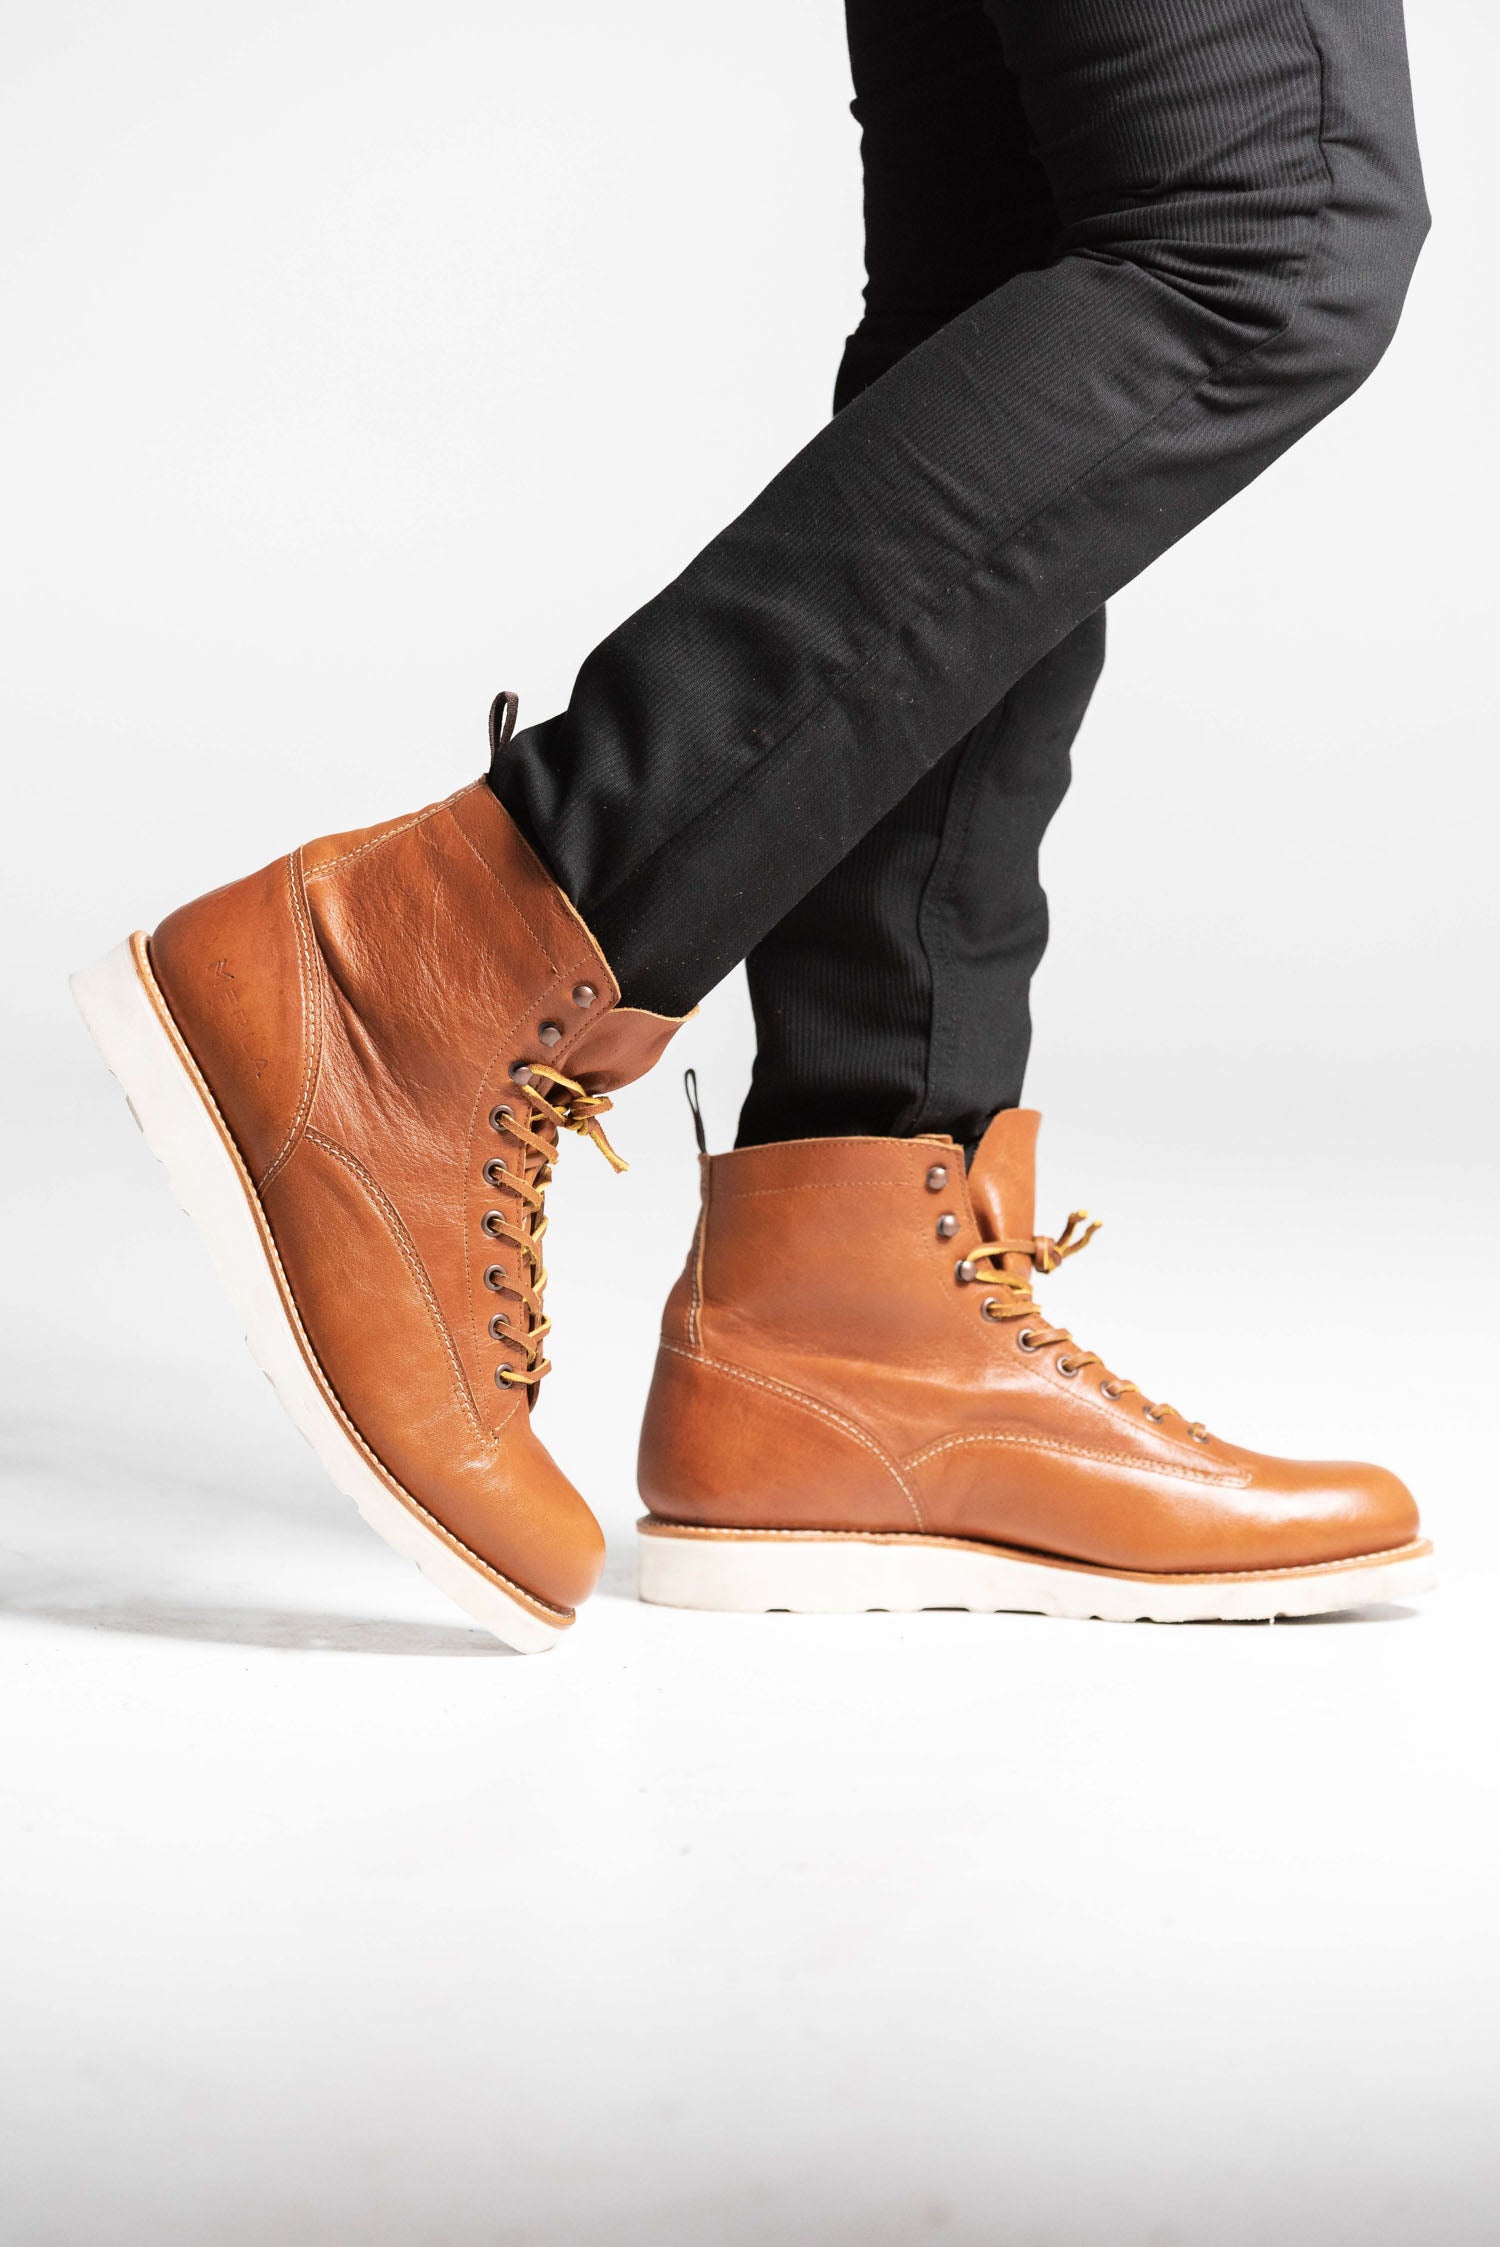 Risco - Mens Tan Leather Boots MERLA MOTO